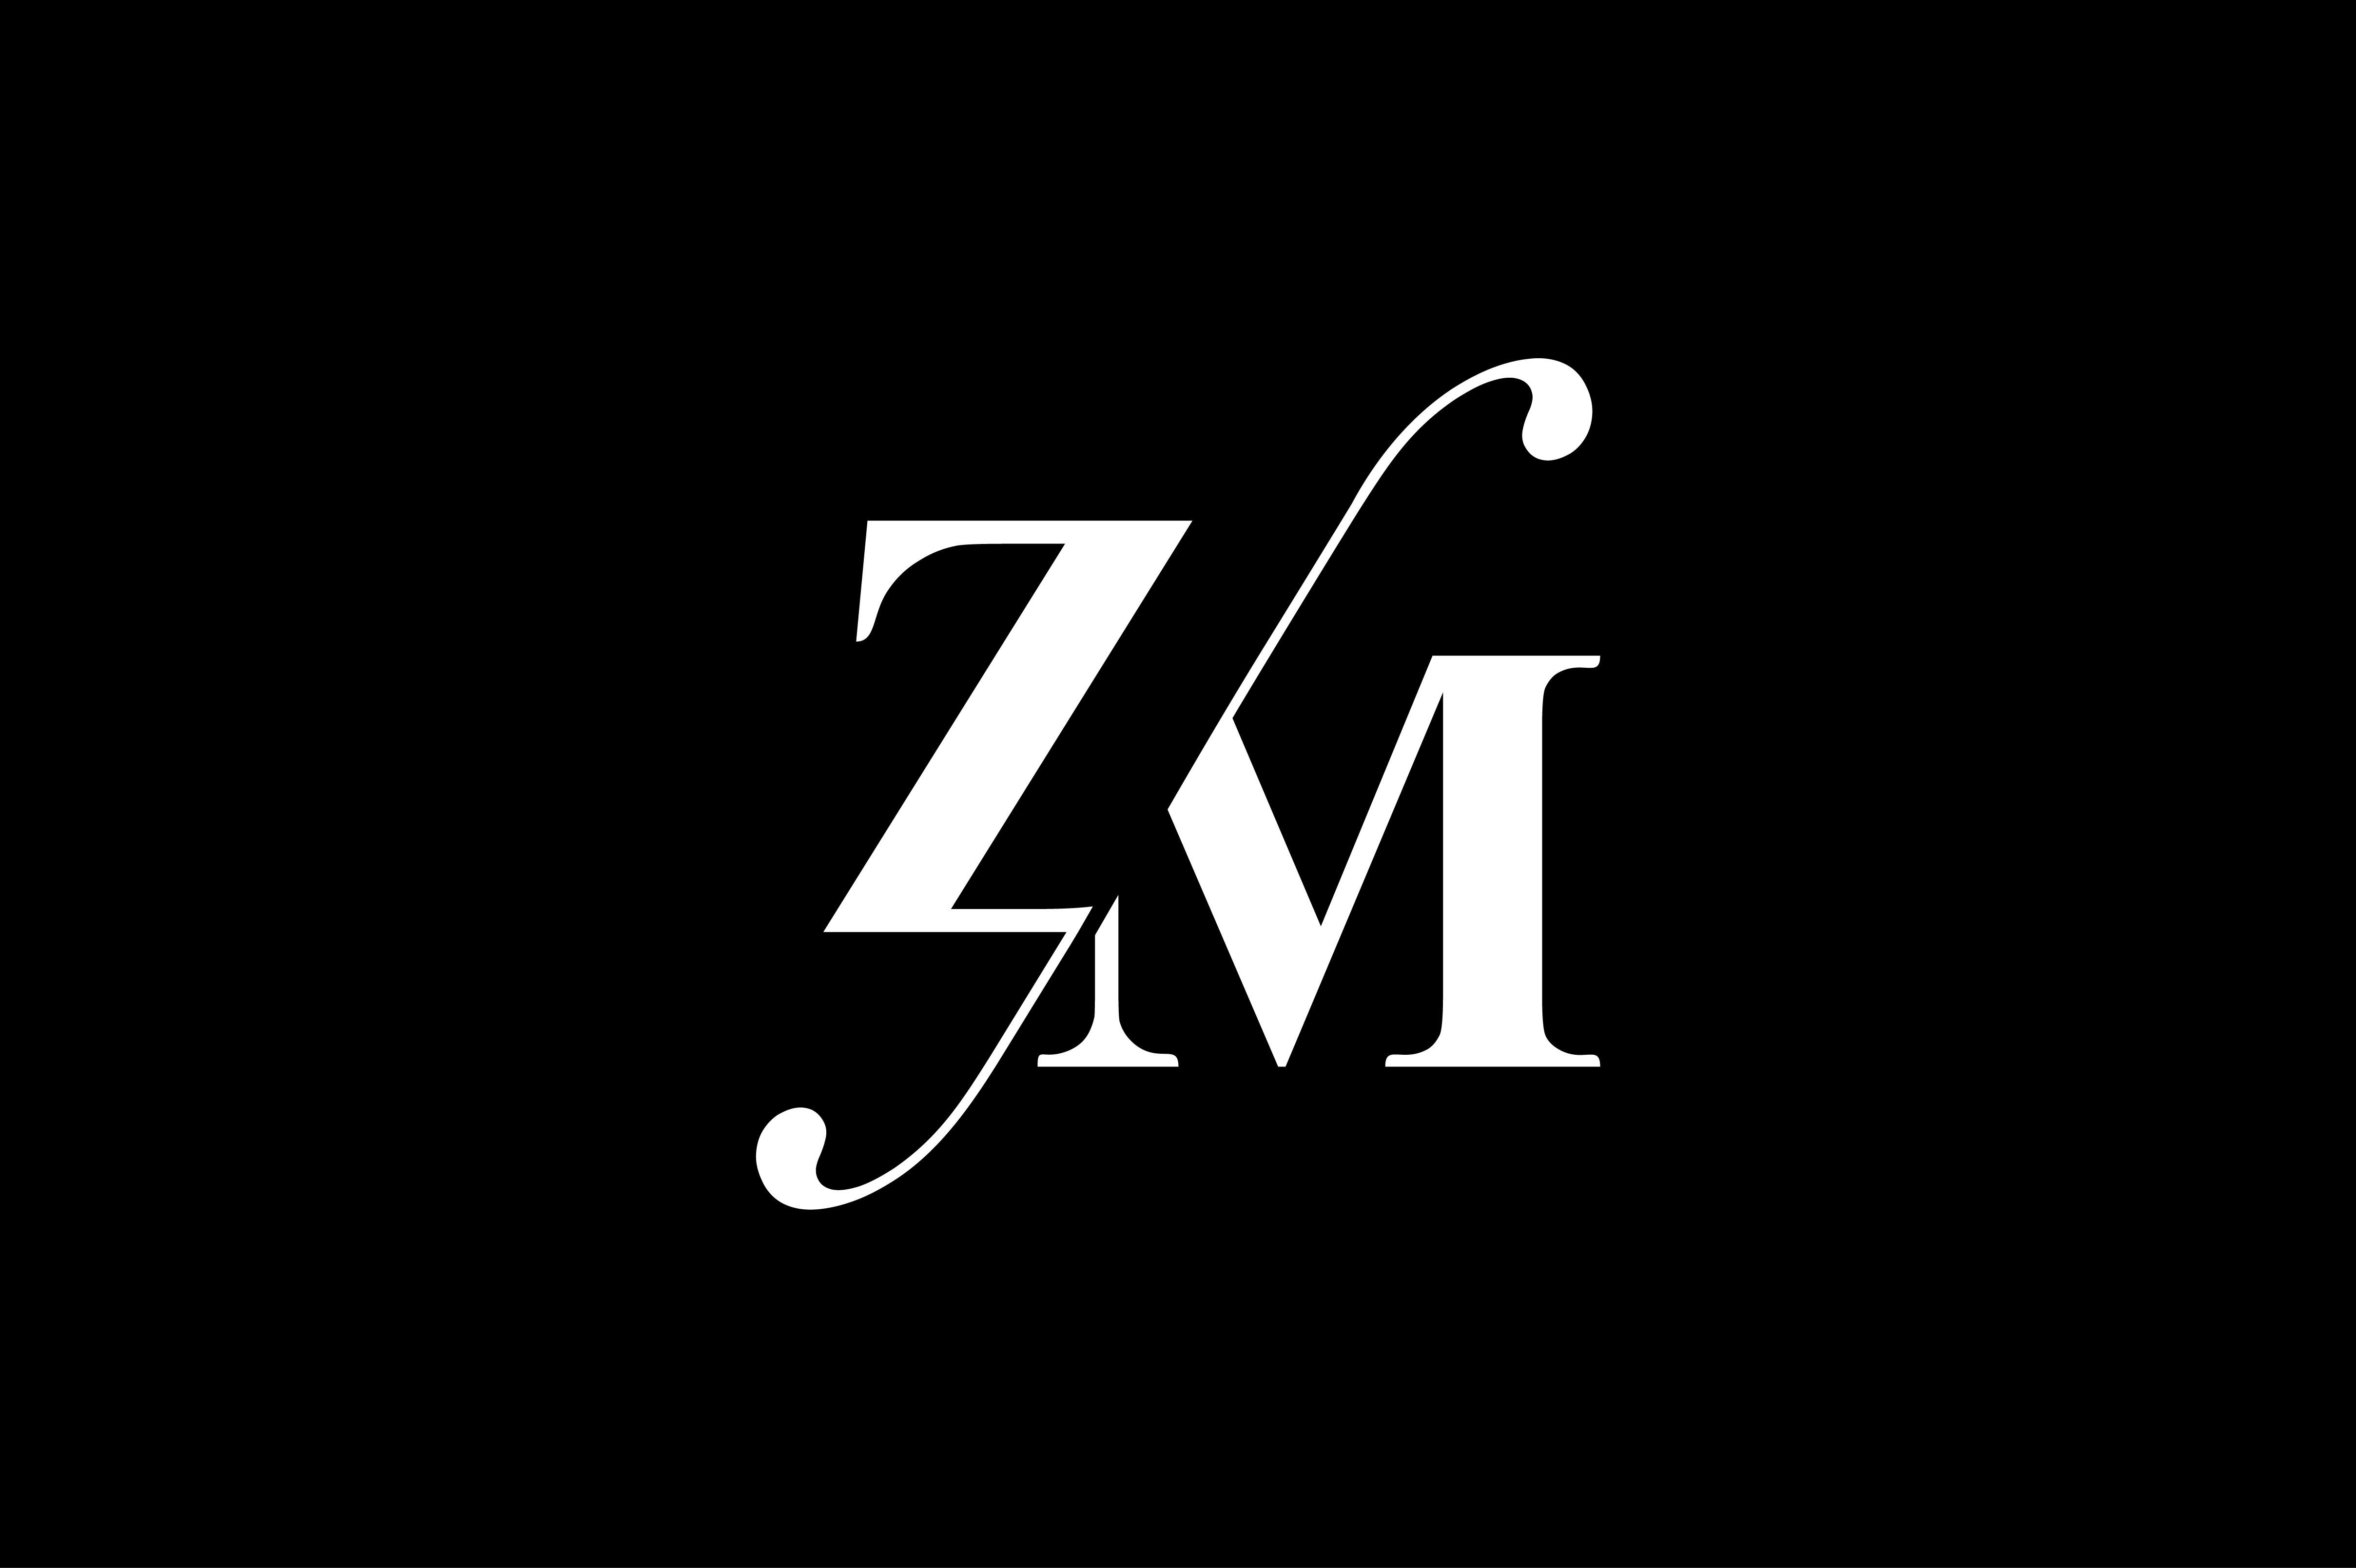 ZM Monogram Logo Design By Vectorseller | TheHungryJPEG.com